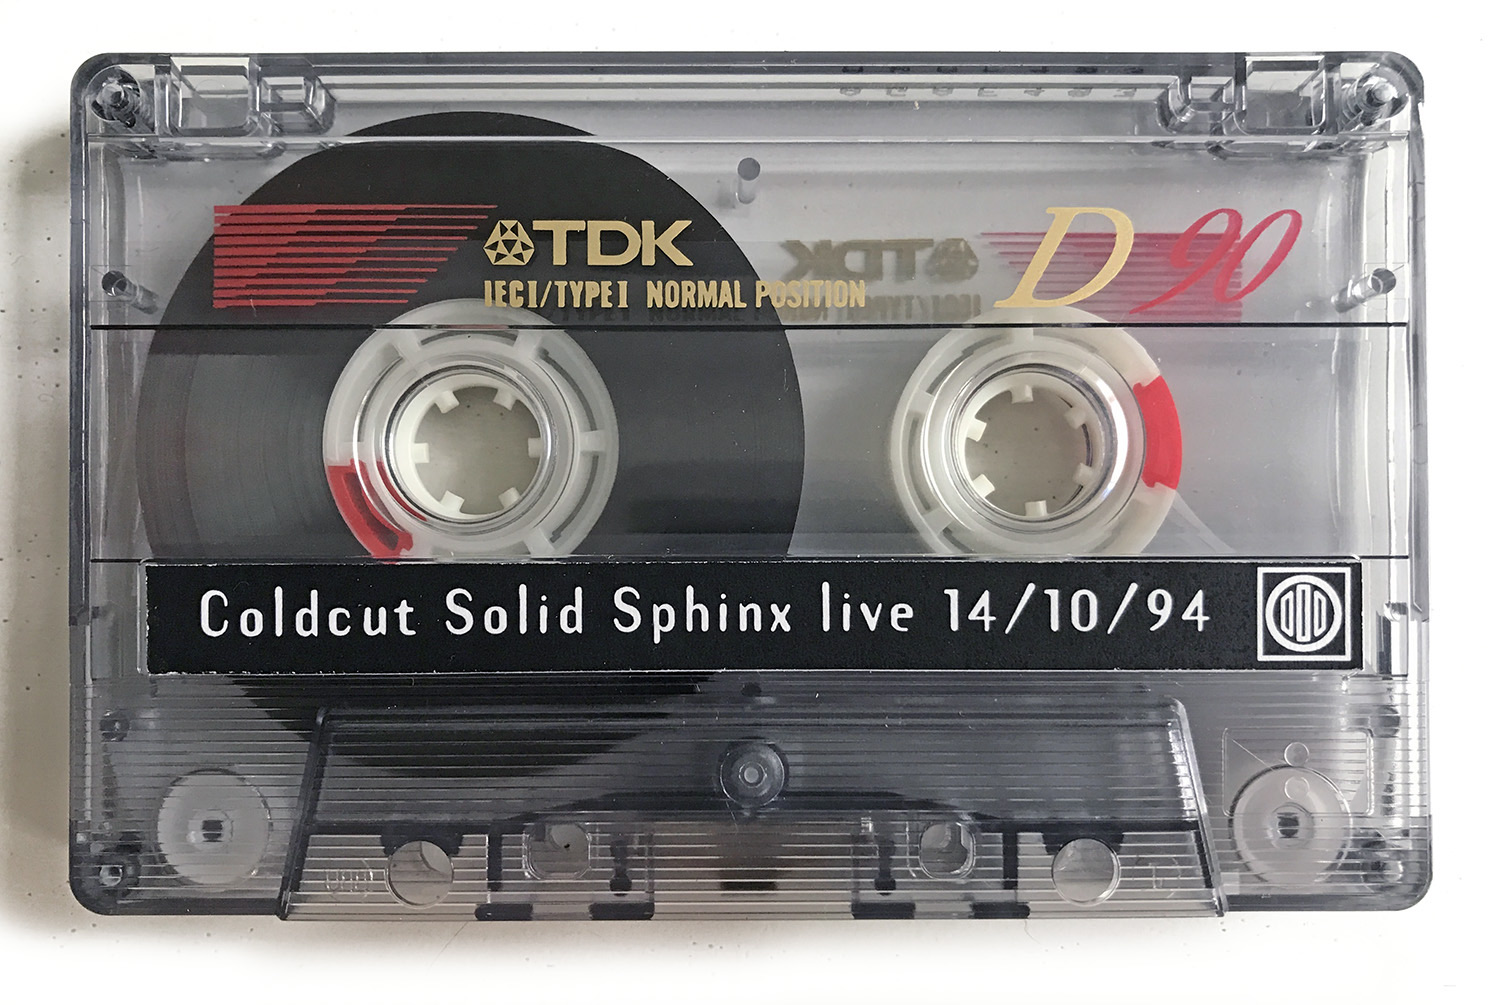 MS198 Tape